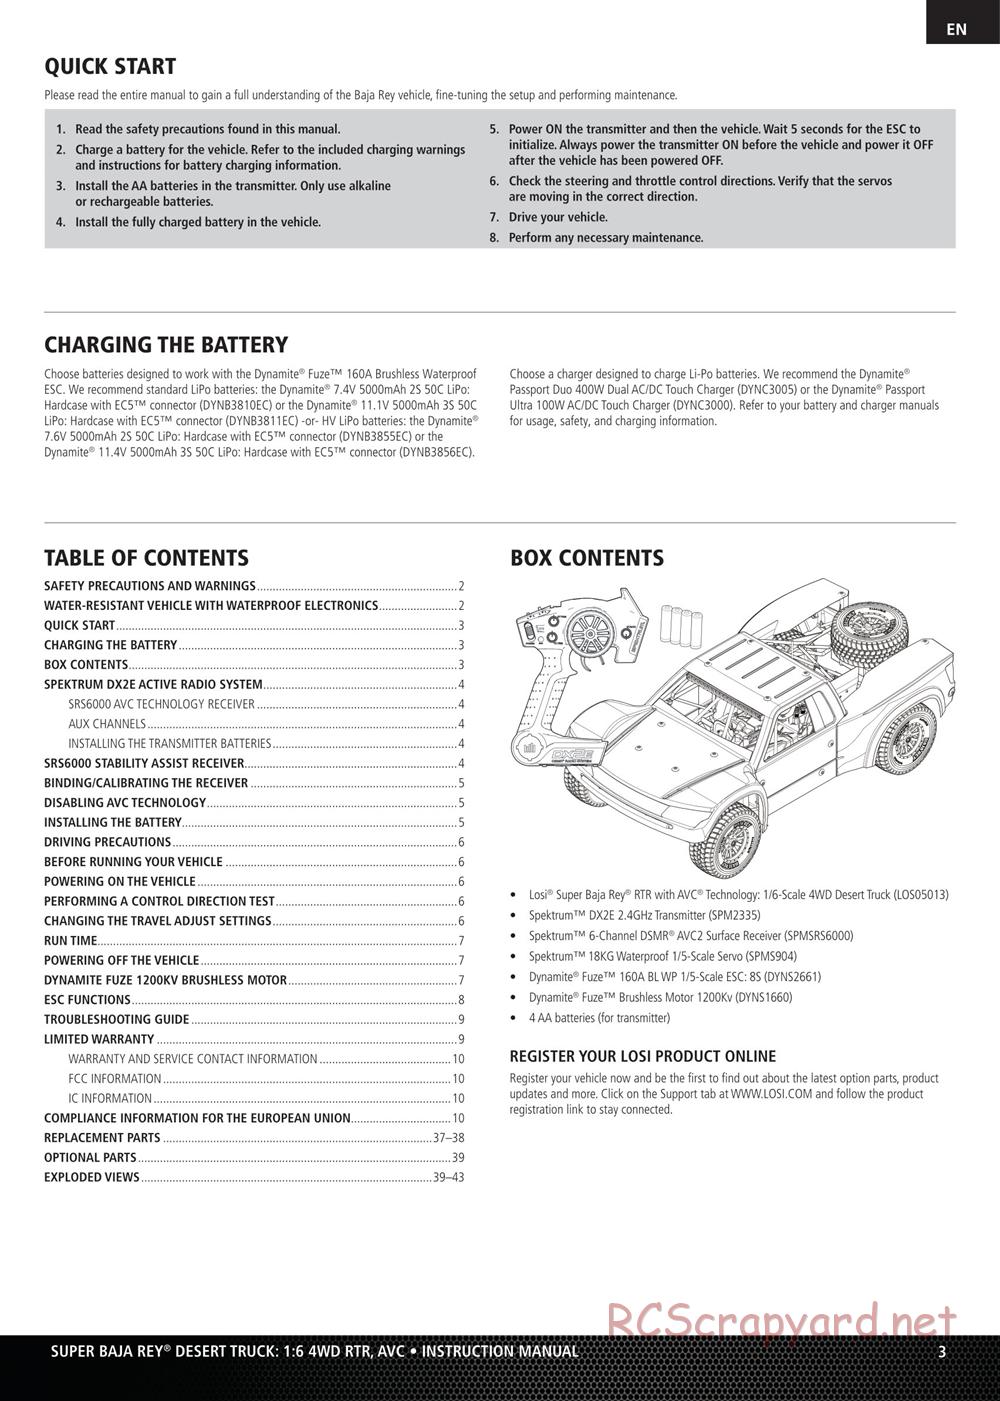 Team Losi - Super Baja Rey - Manual - Page 3